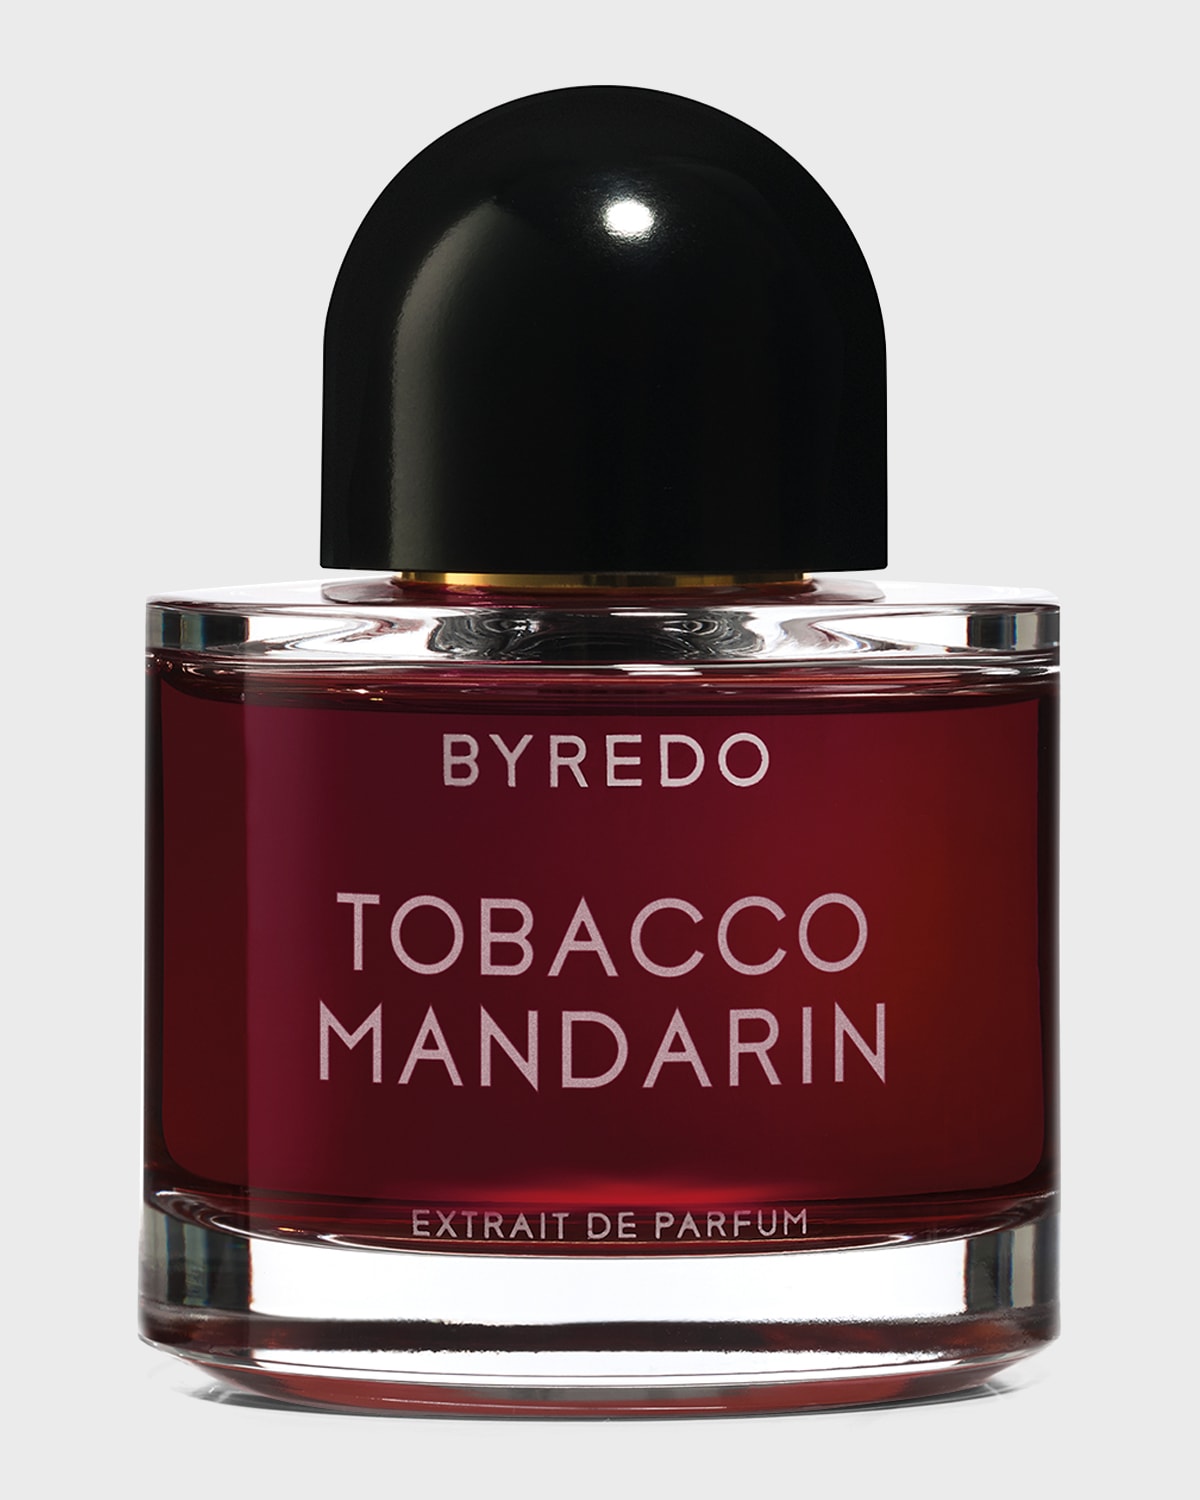 Tobacco Mandarin Extrait de Parfum, 1.7 oz.